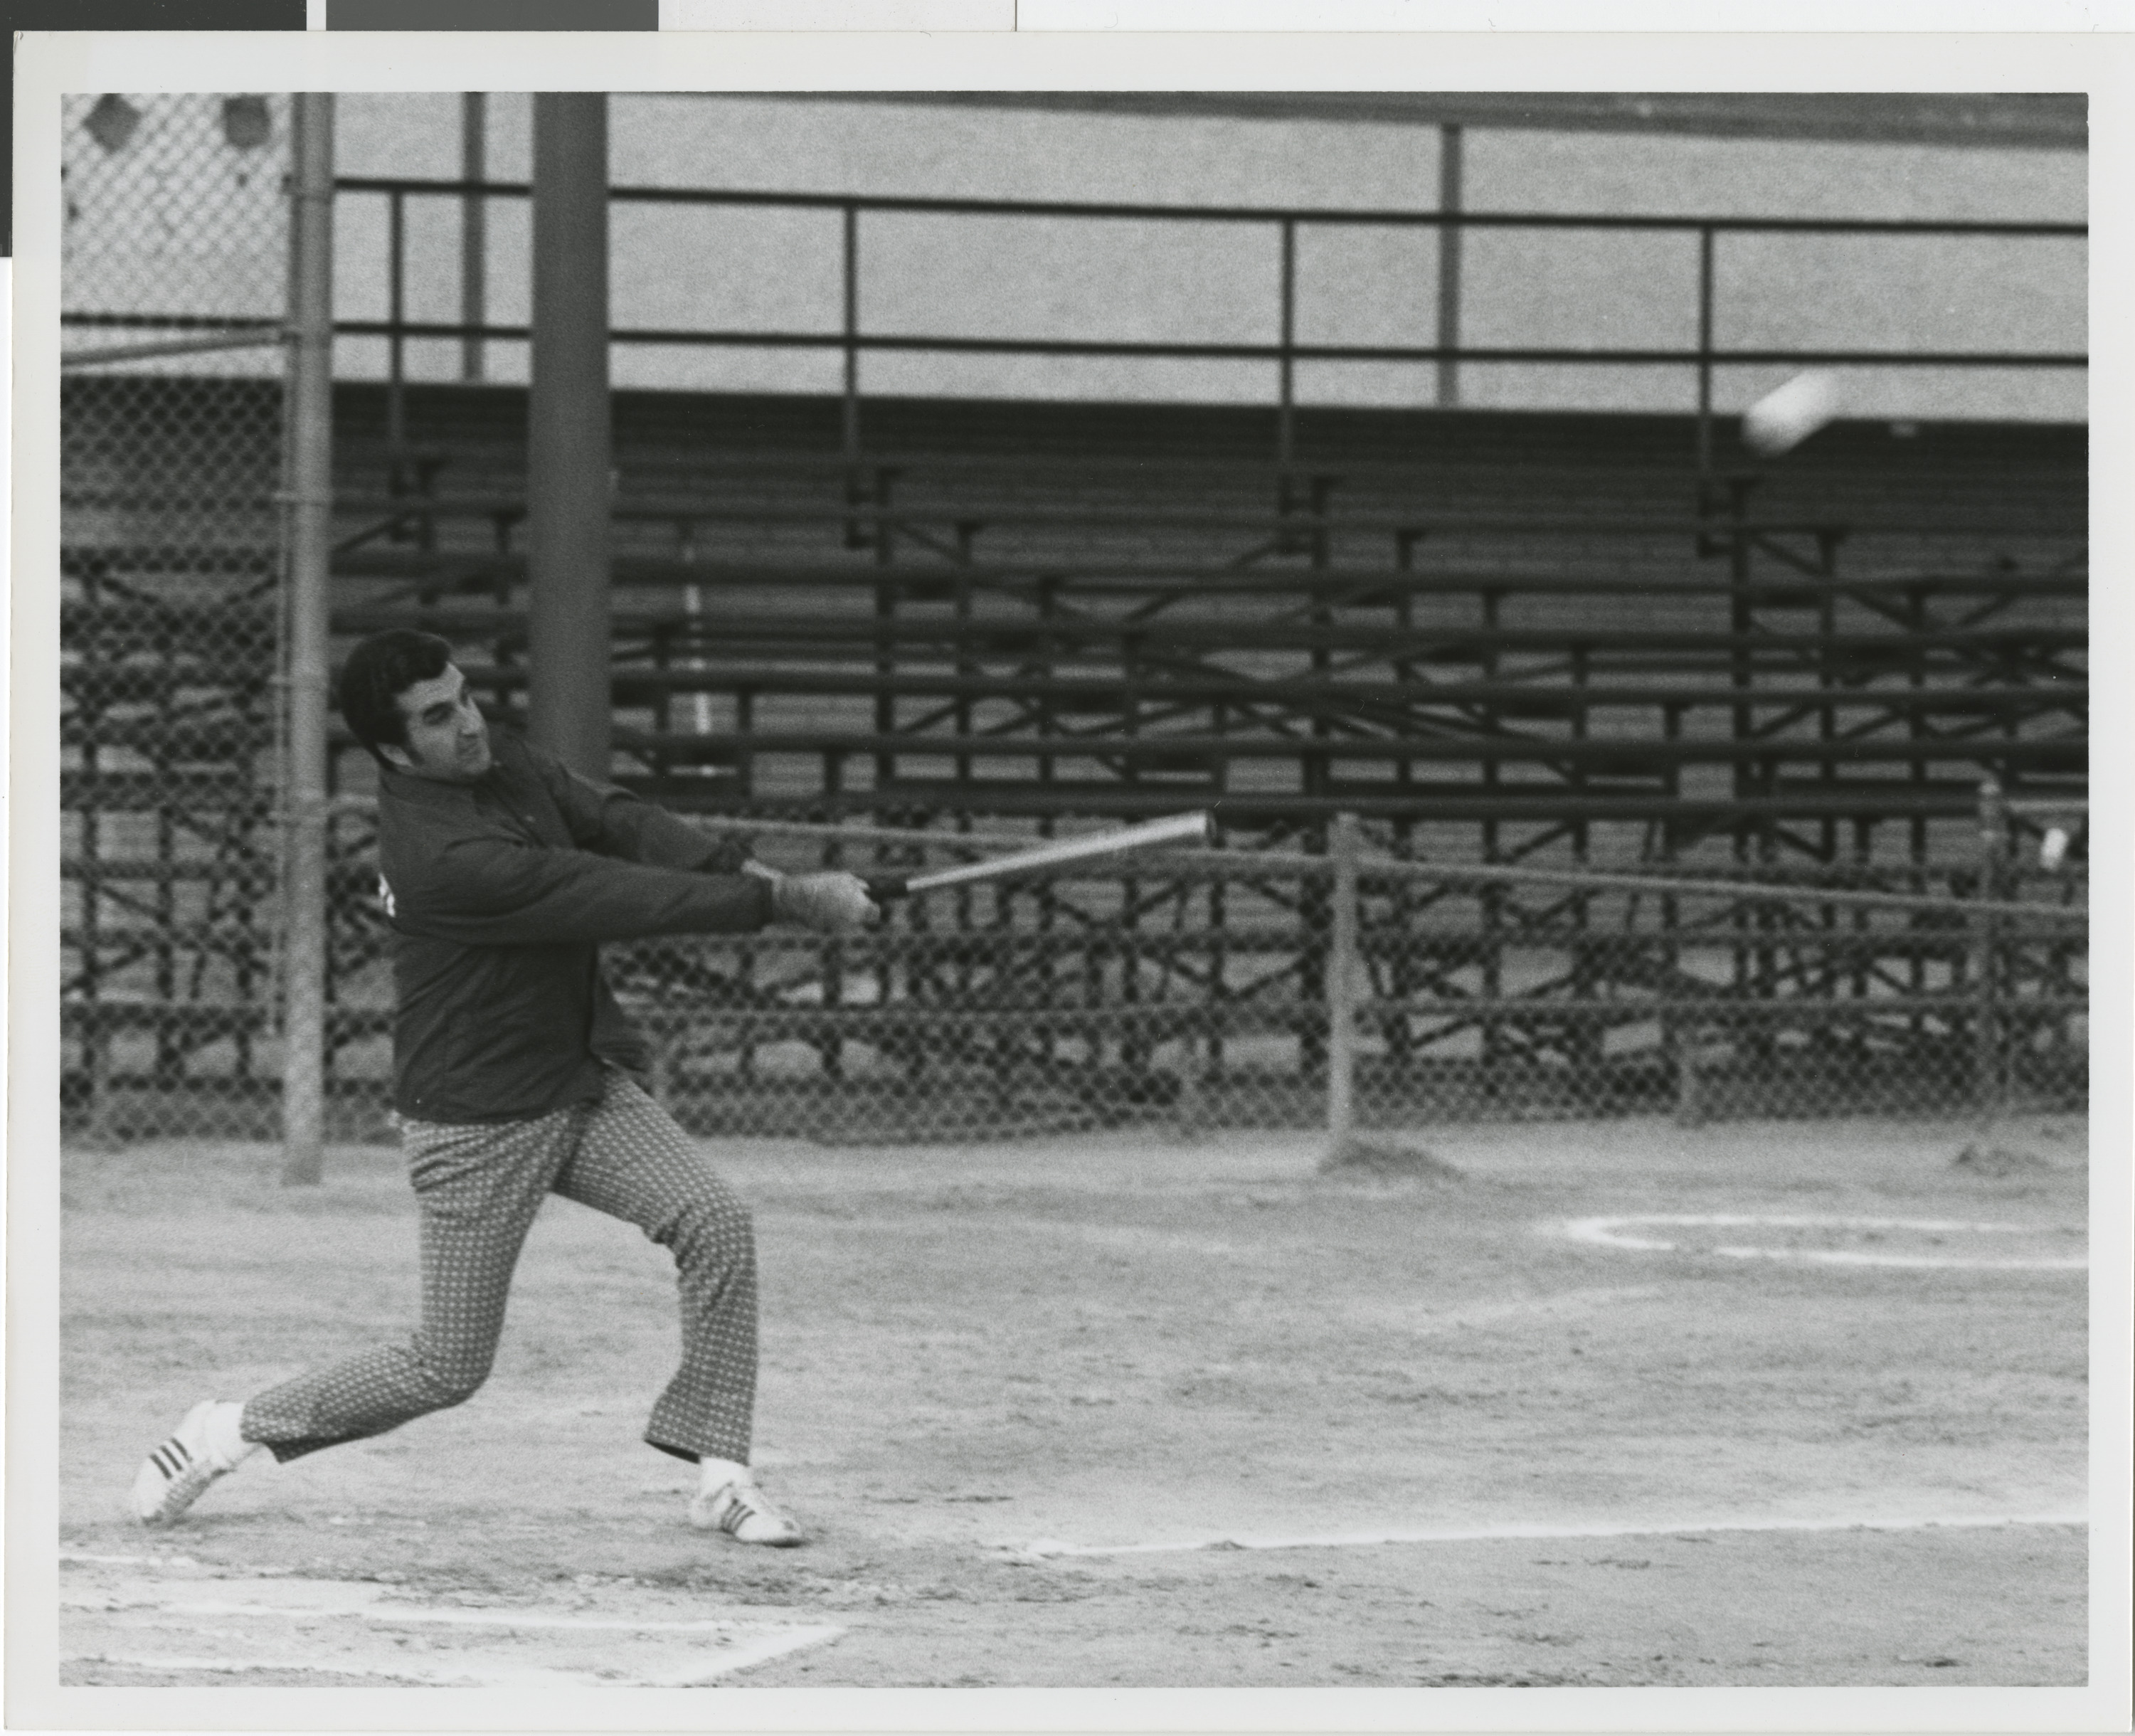 Photograph of Ron Lurie swinging a baseball bat on a baseball field